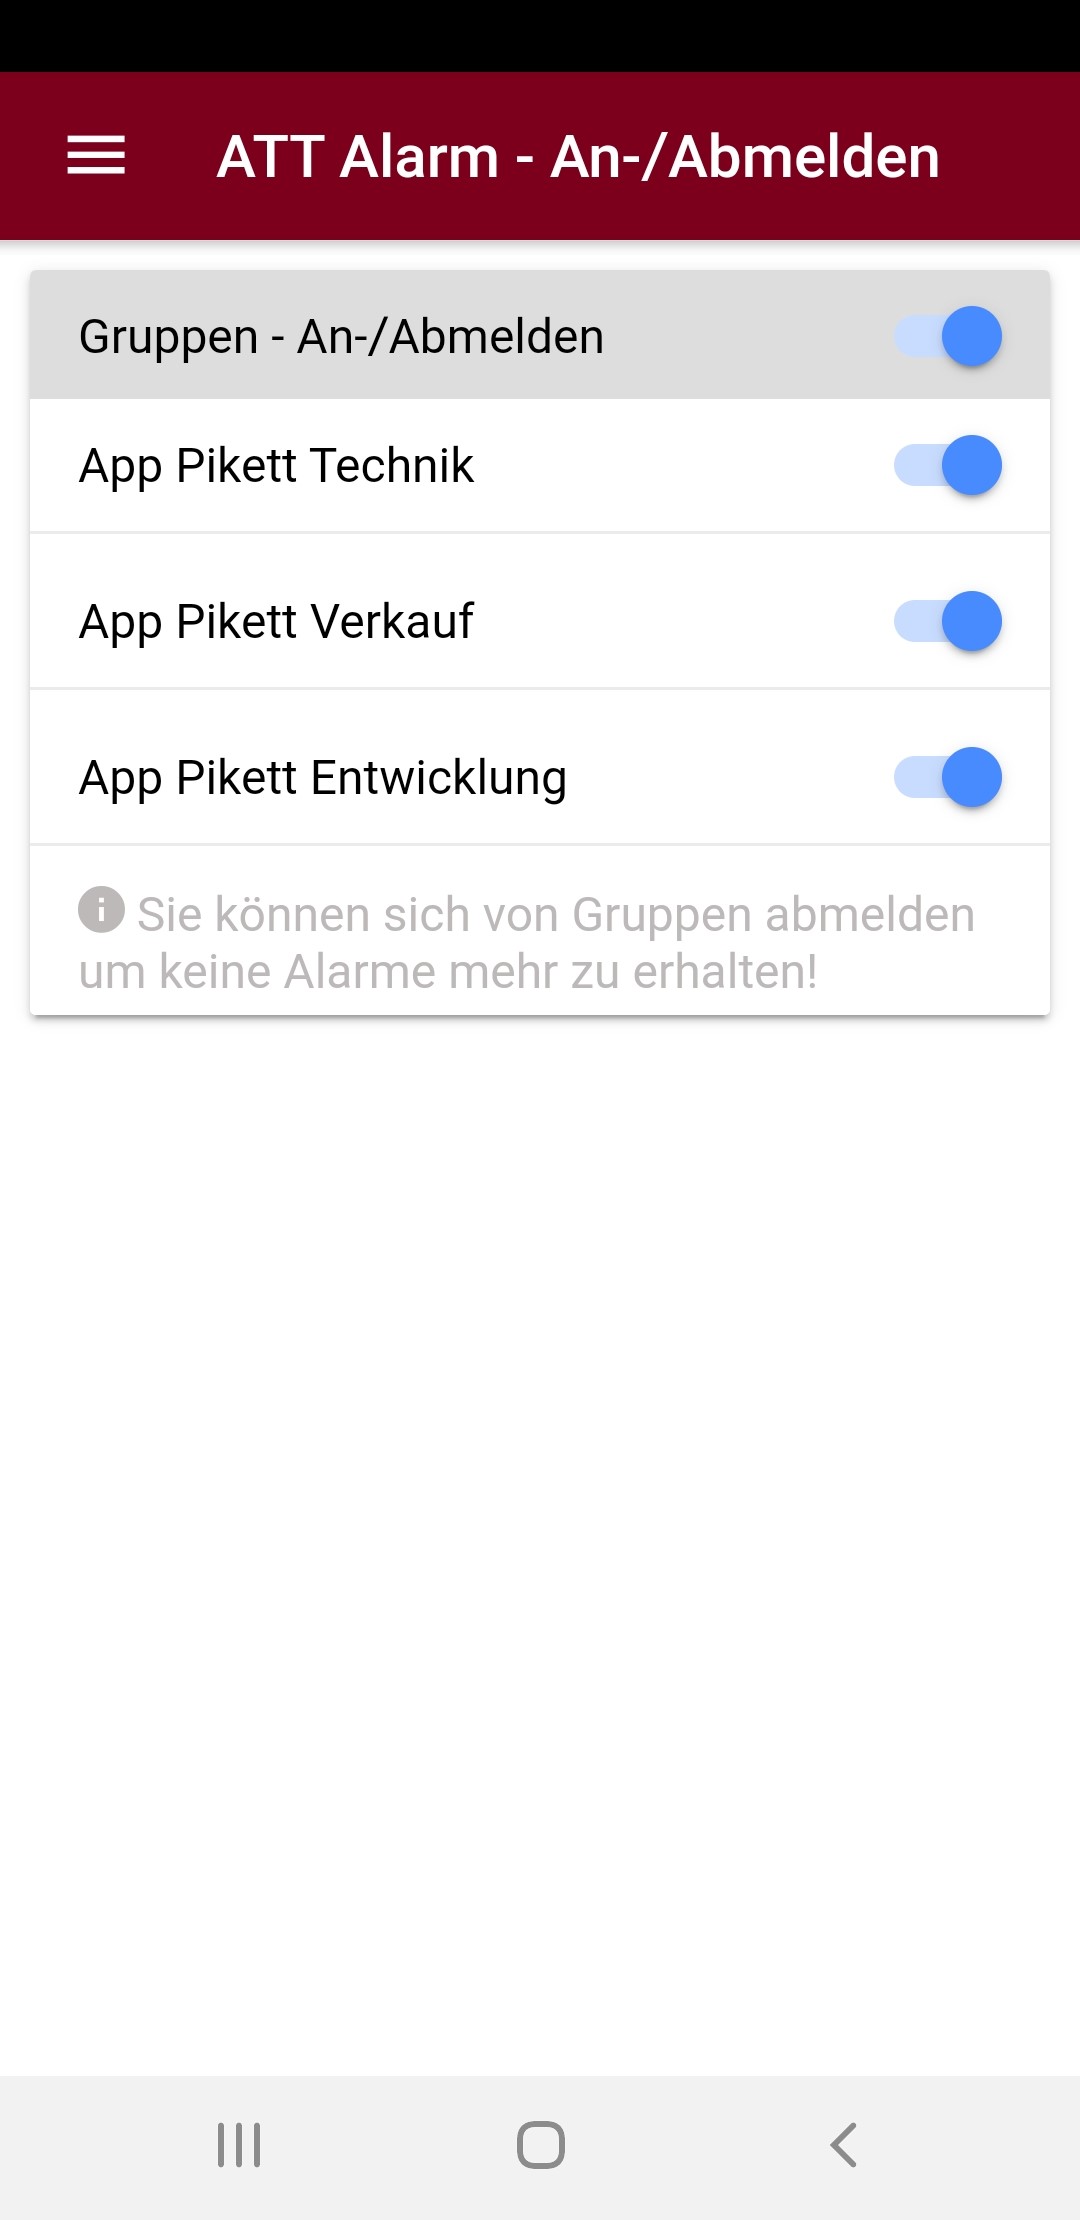 Mobile App Teil 3 - An-/Abmelden